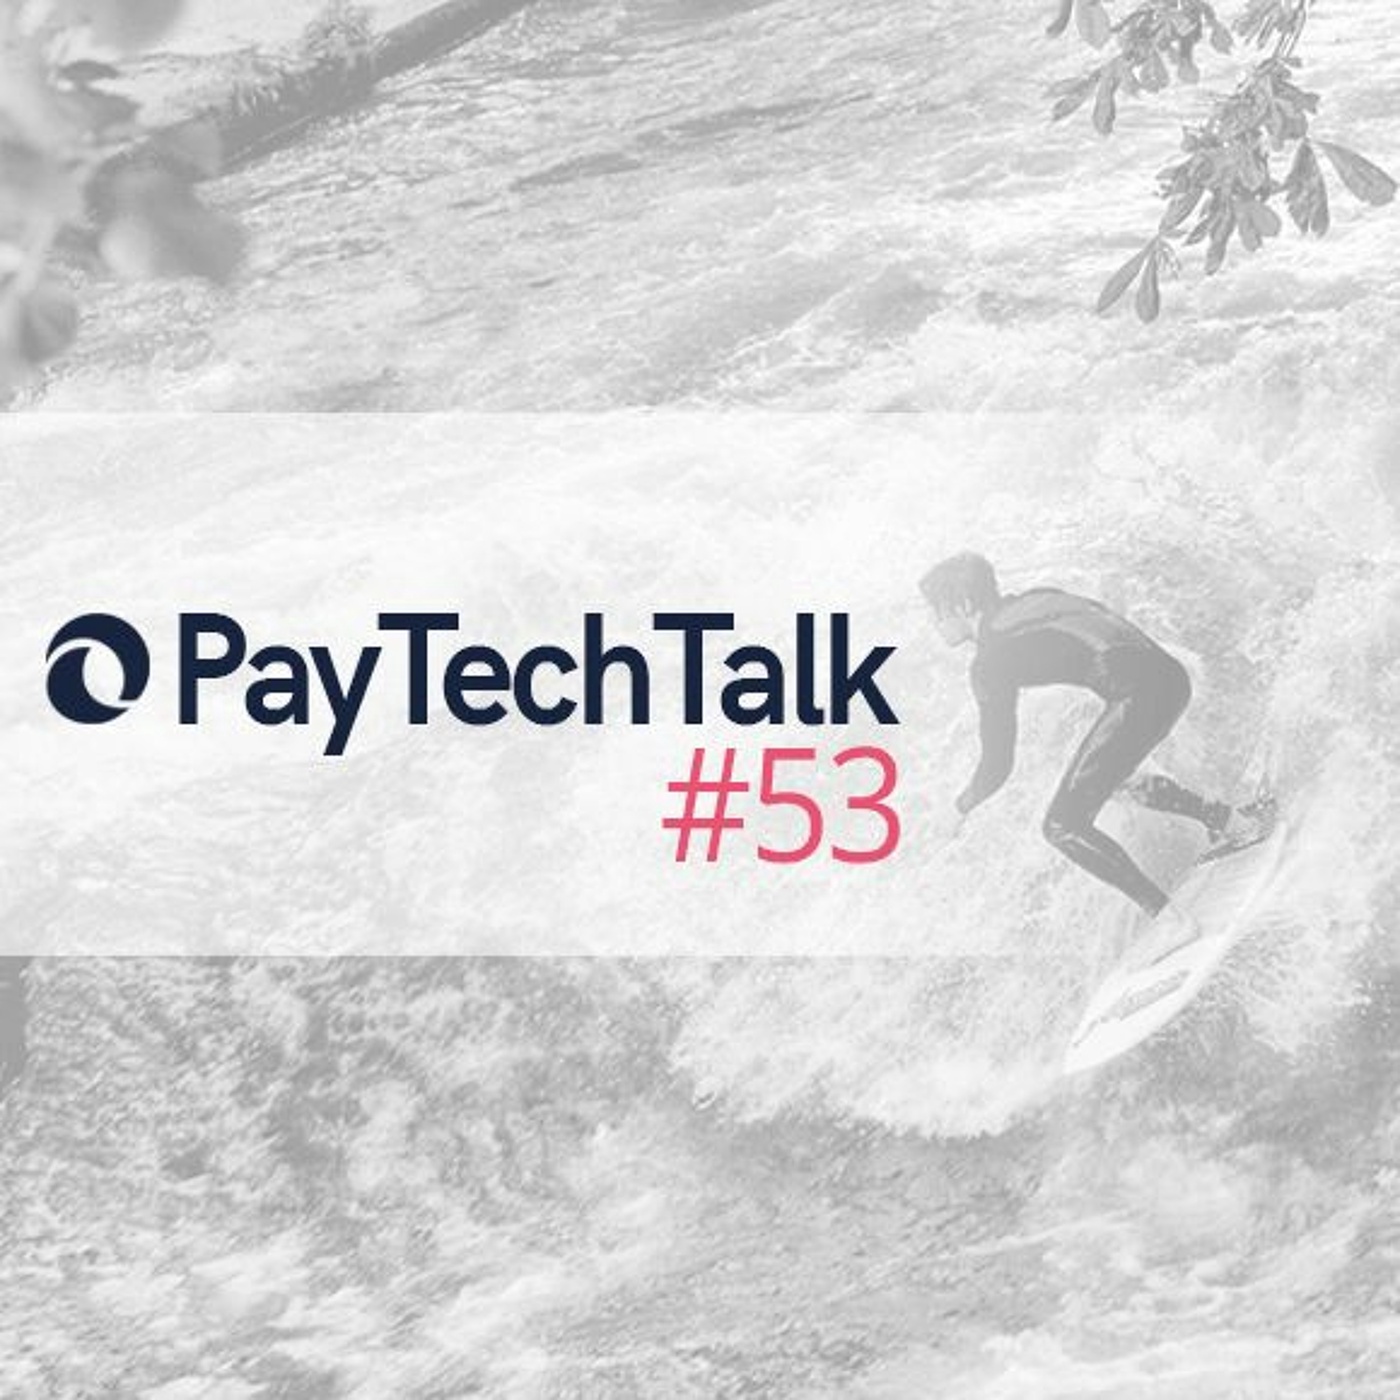 PayTechTalk #53 - AMLD5 as a start for crypto regulation